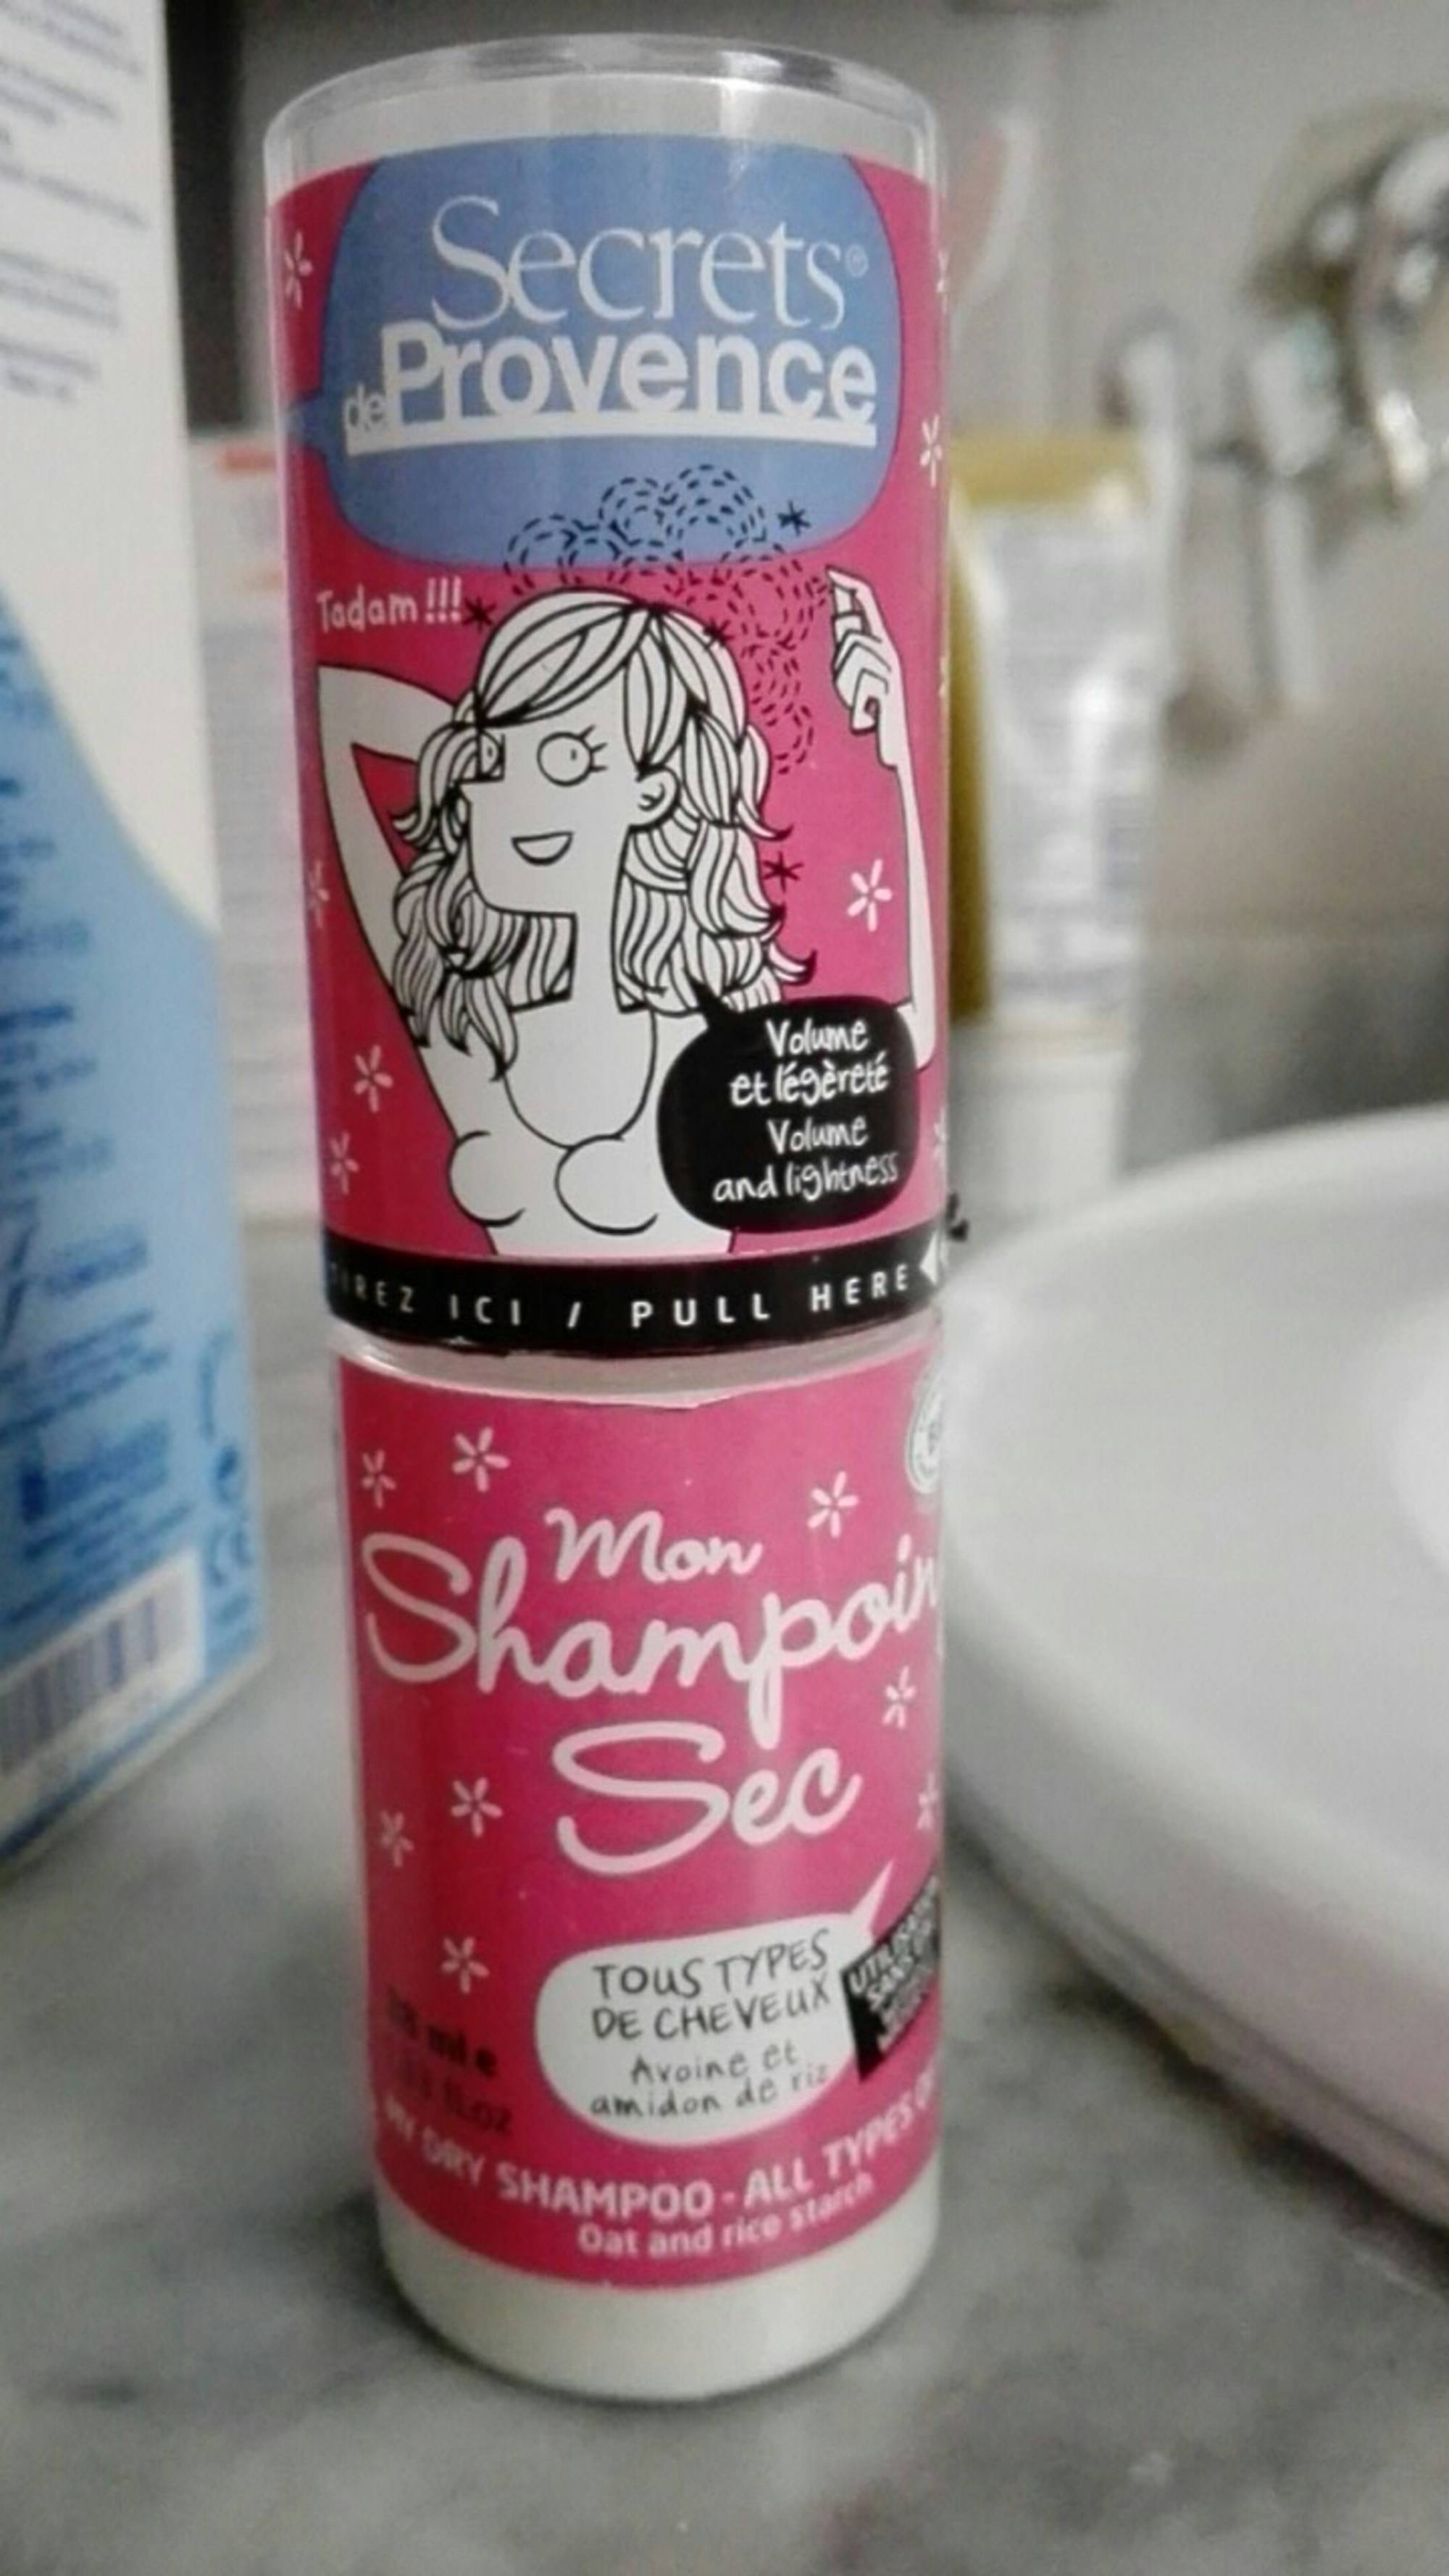 SECRETS DE PROVENCE - Mon shampoing sec 